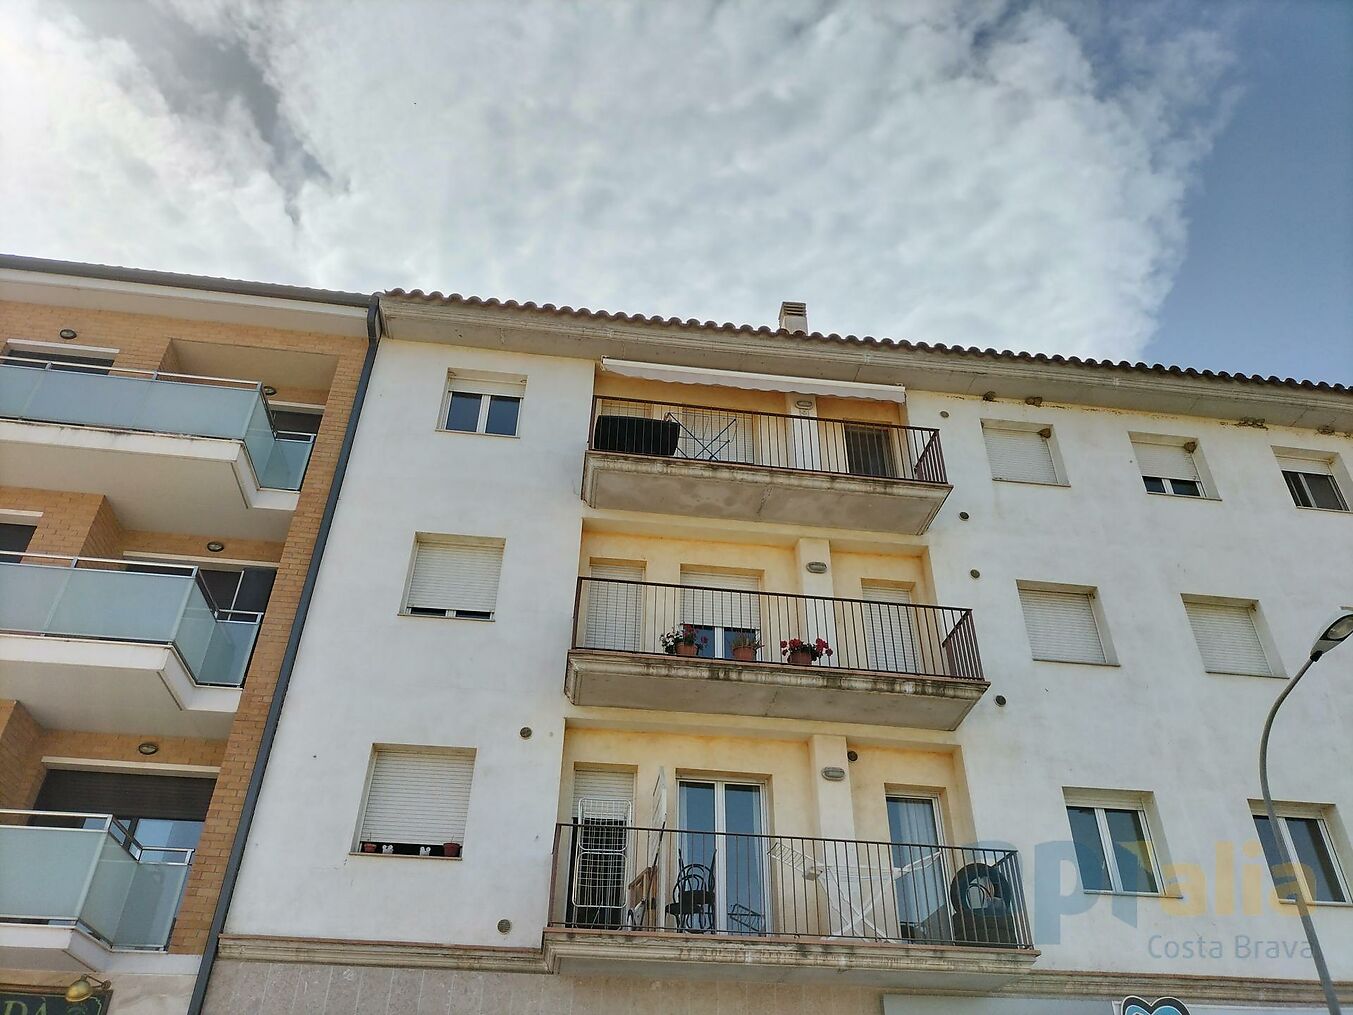 Apartment in the center of Santa Cristina d'Aro